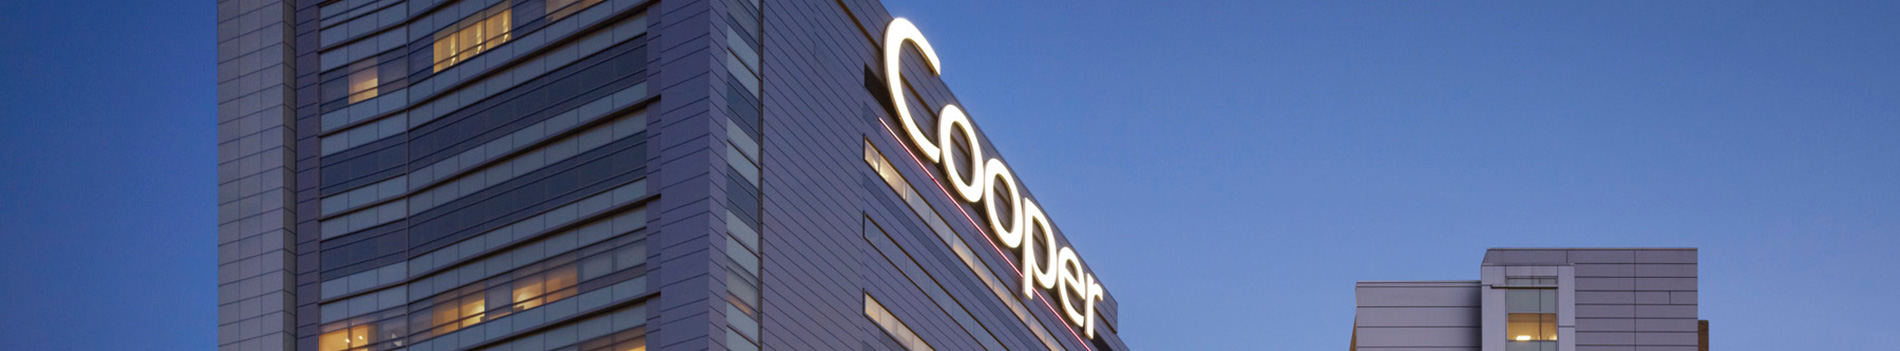 Cooper University Hospital, Cooper University Hospital - One Cooper ...